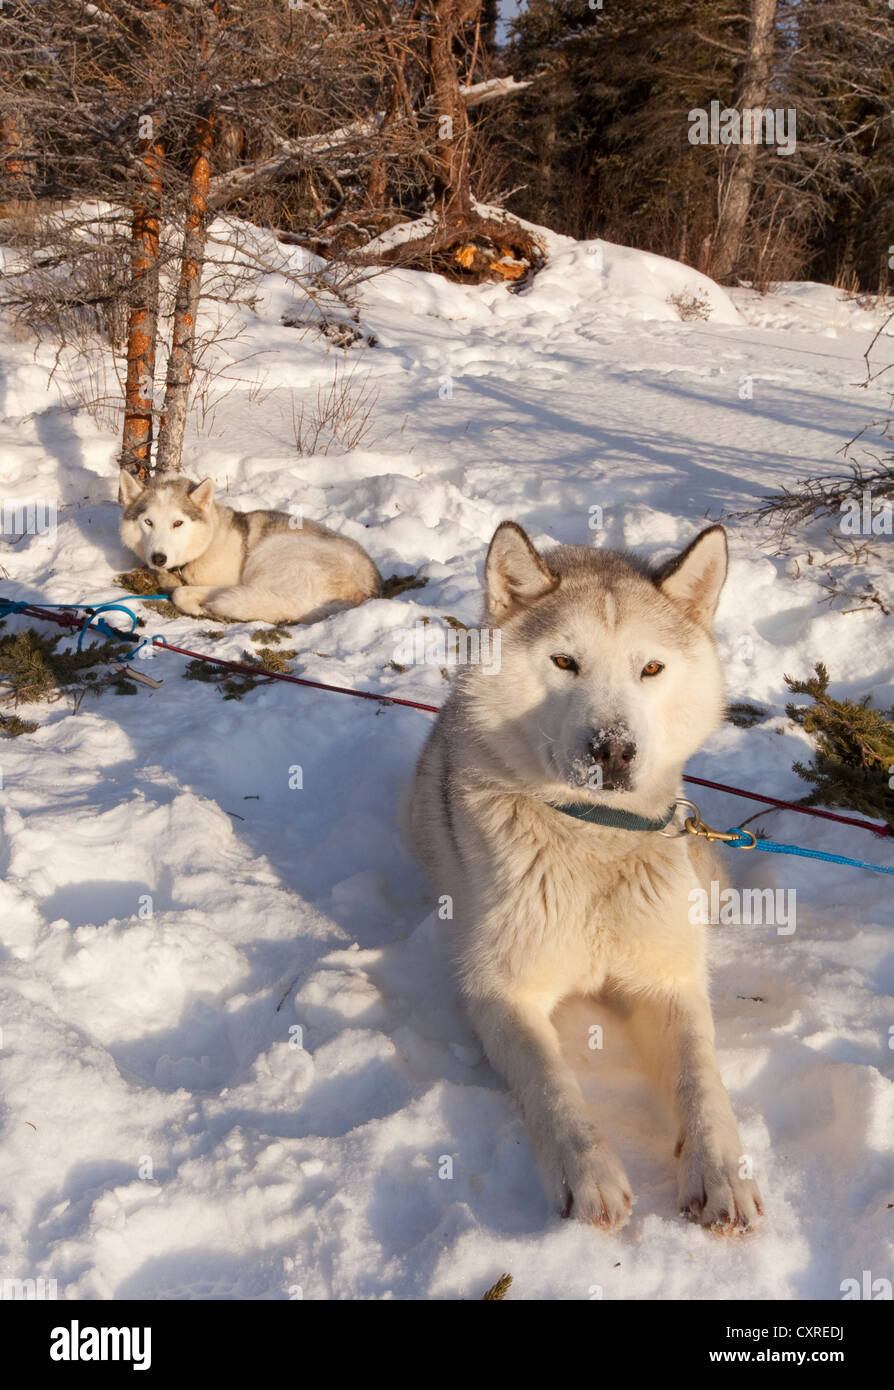 Sled dogs, Siberian Huskies, resting in snow, Yukon Territory, Canada Stock Photo